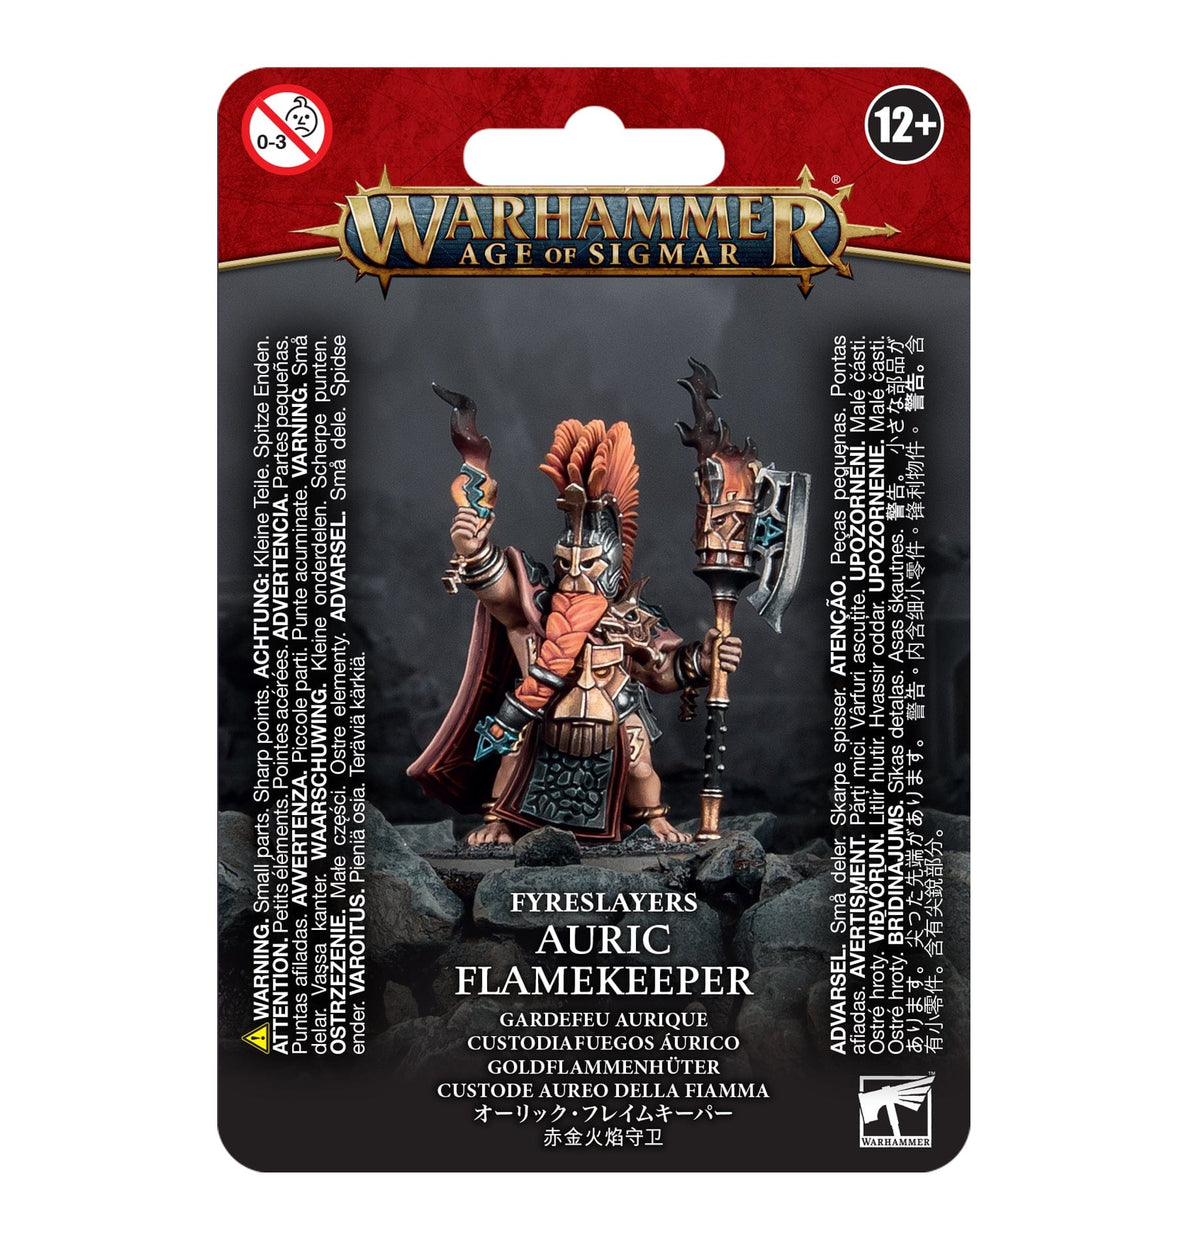 Warhammer - Age of Sigmar: Fyreslayers - Auric Flamekeeper - Third Eye